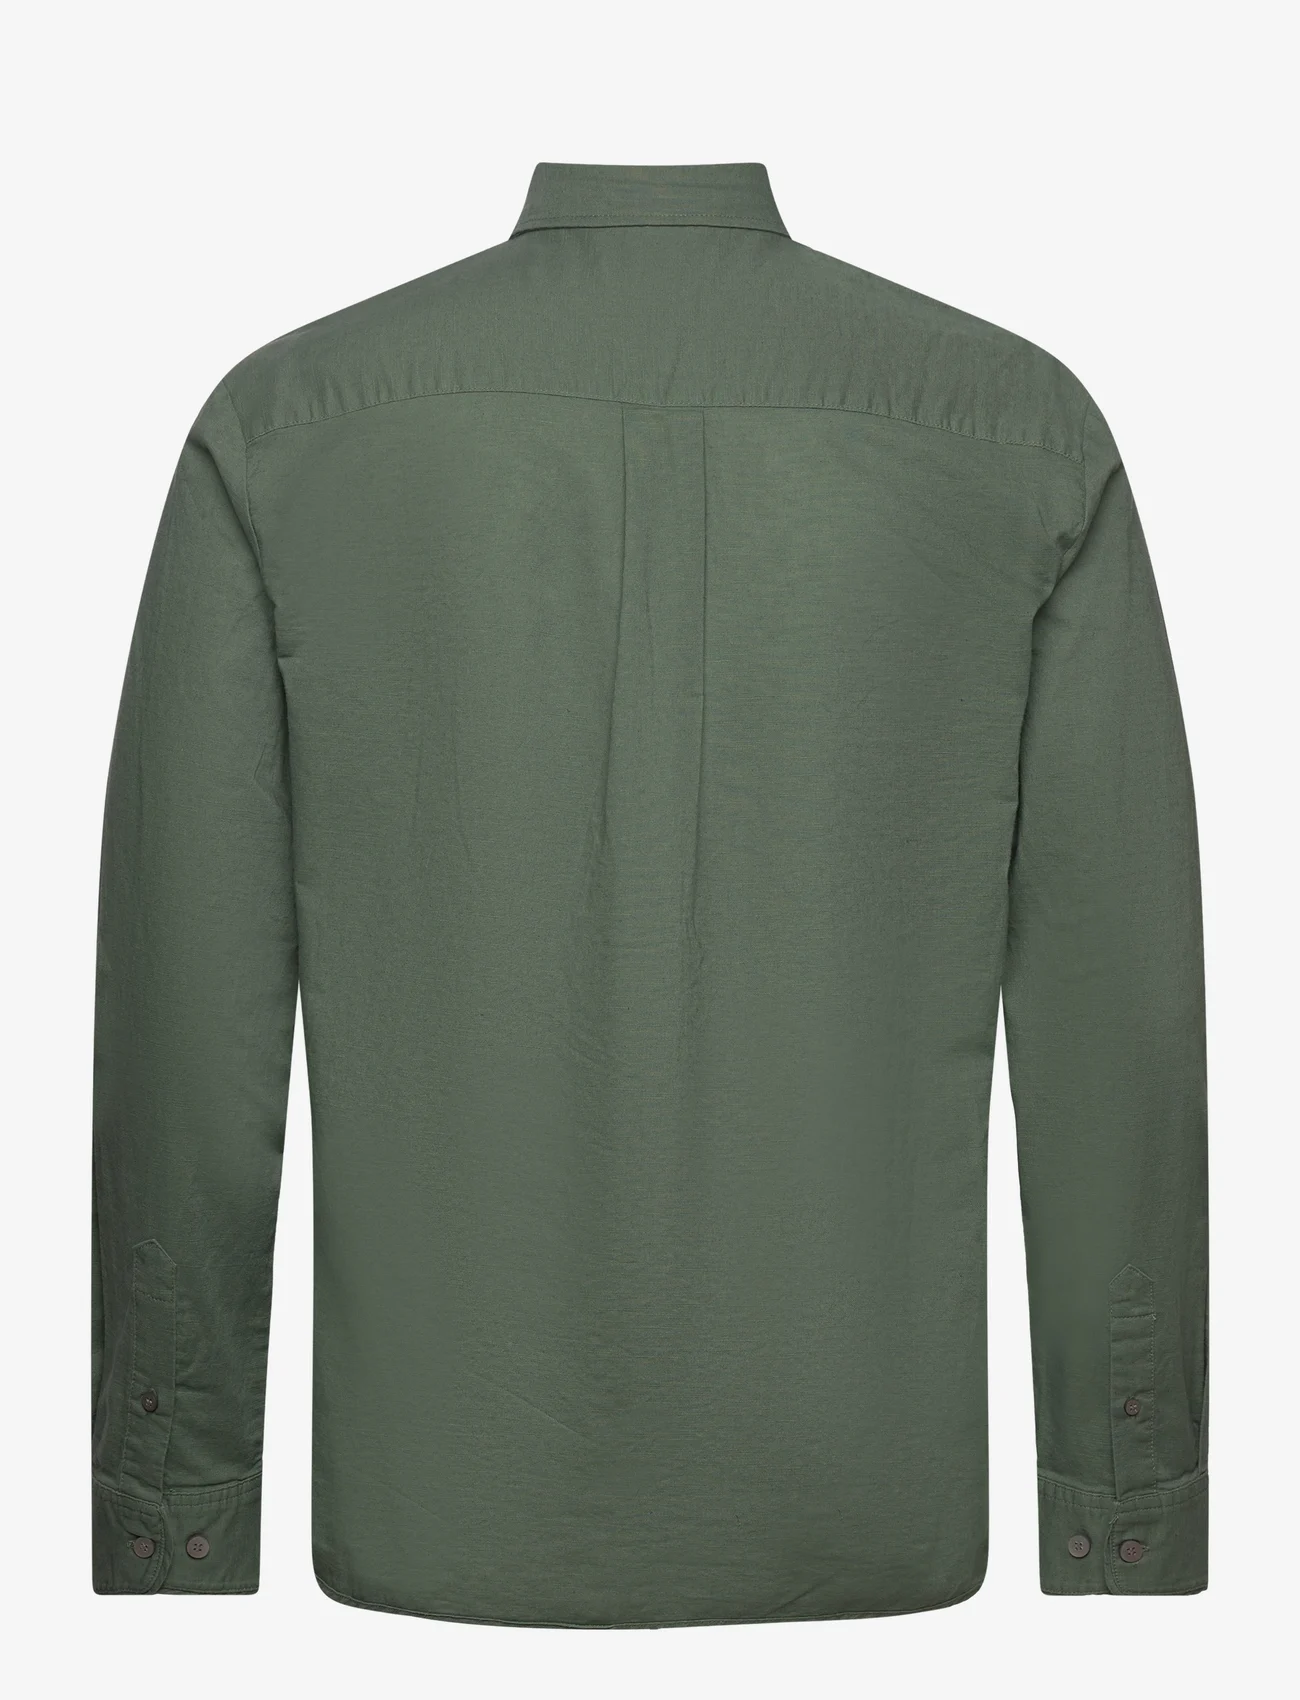 Bruuns Bazaar - LinowBBGiil LS shirt - koszule casual - frosty spruce - 1